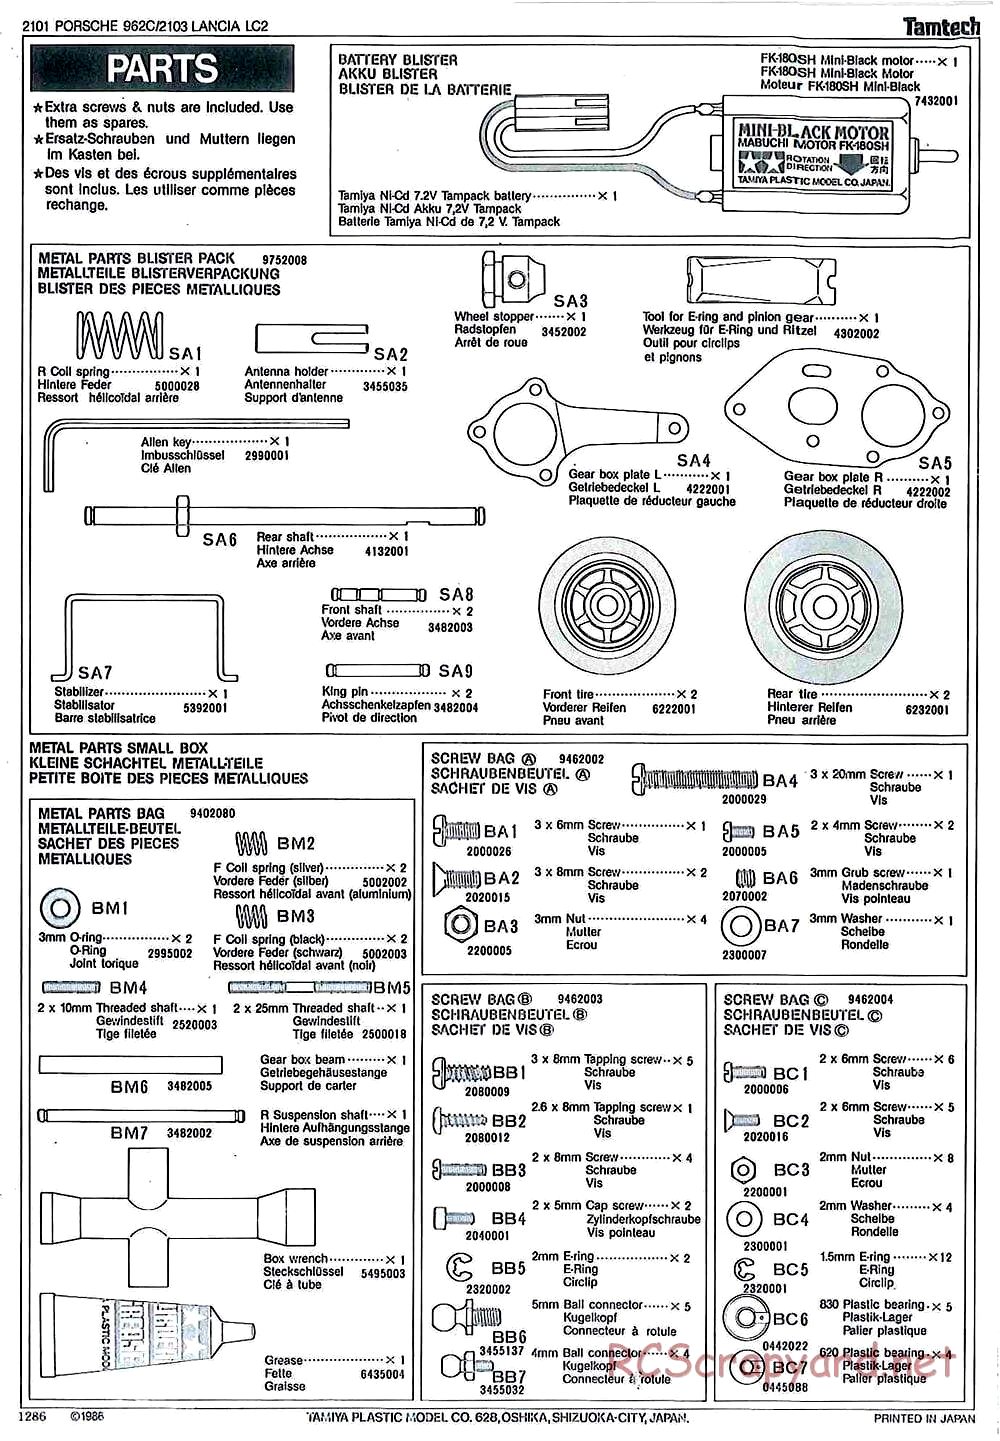 Tamiya - TamTech - F1 Chassis - Manual - Page 16